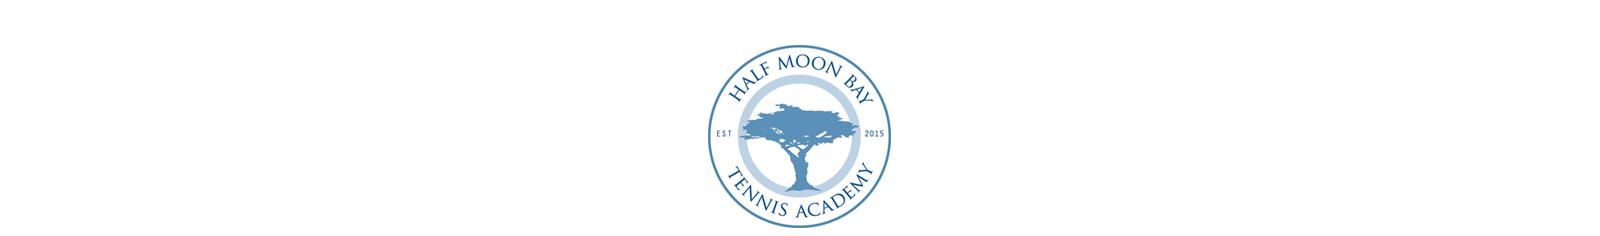 Half Moon Bay Tennis Academy Logo